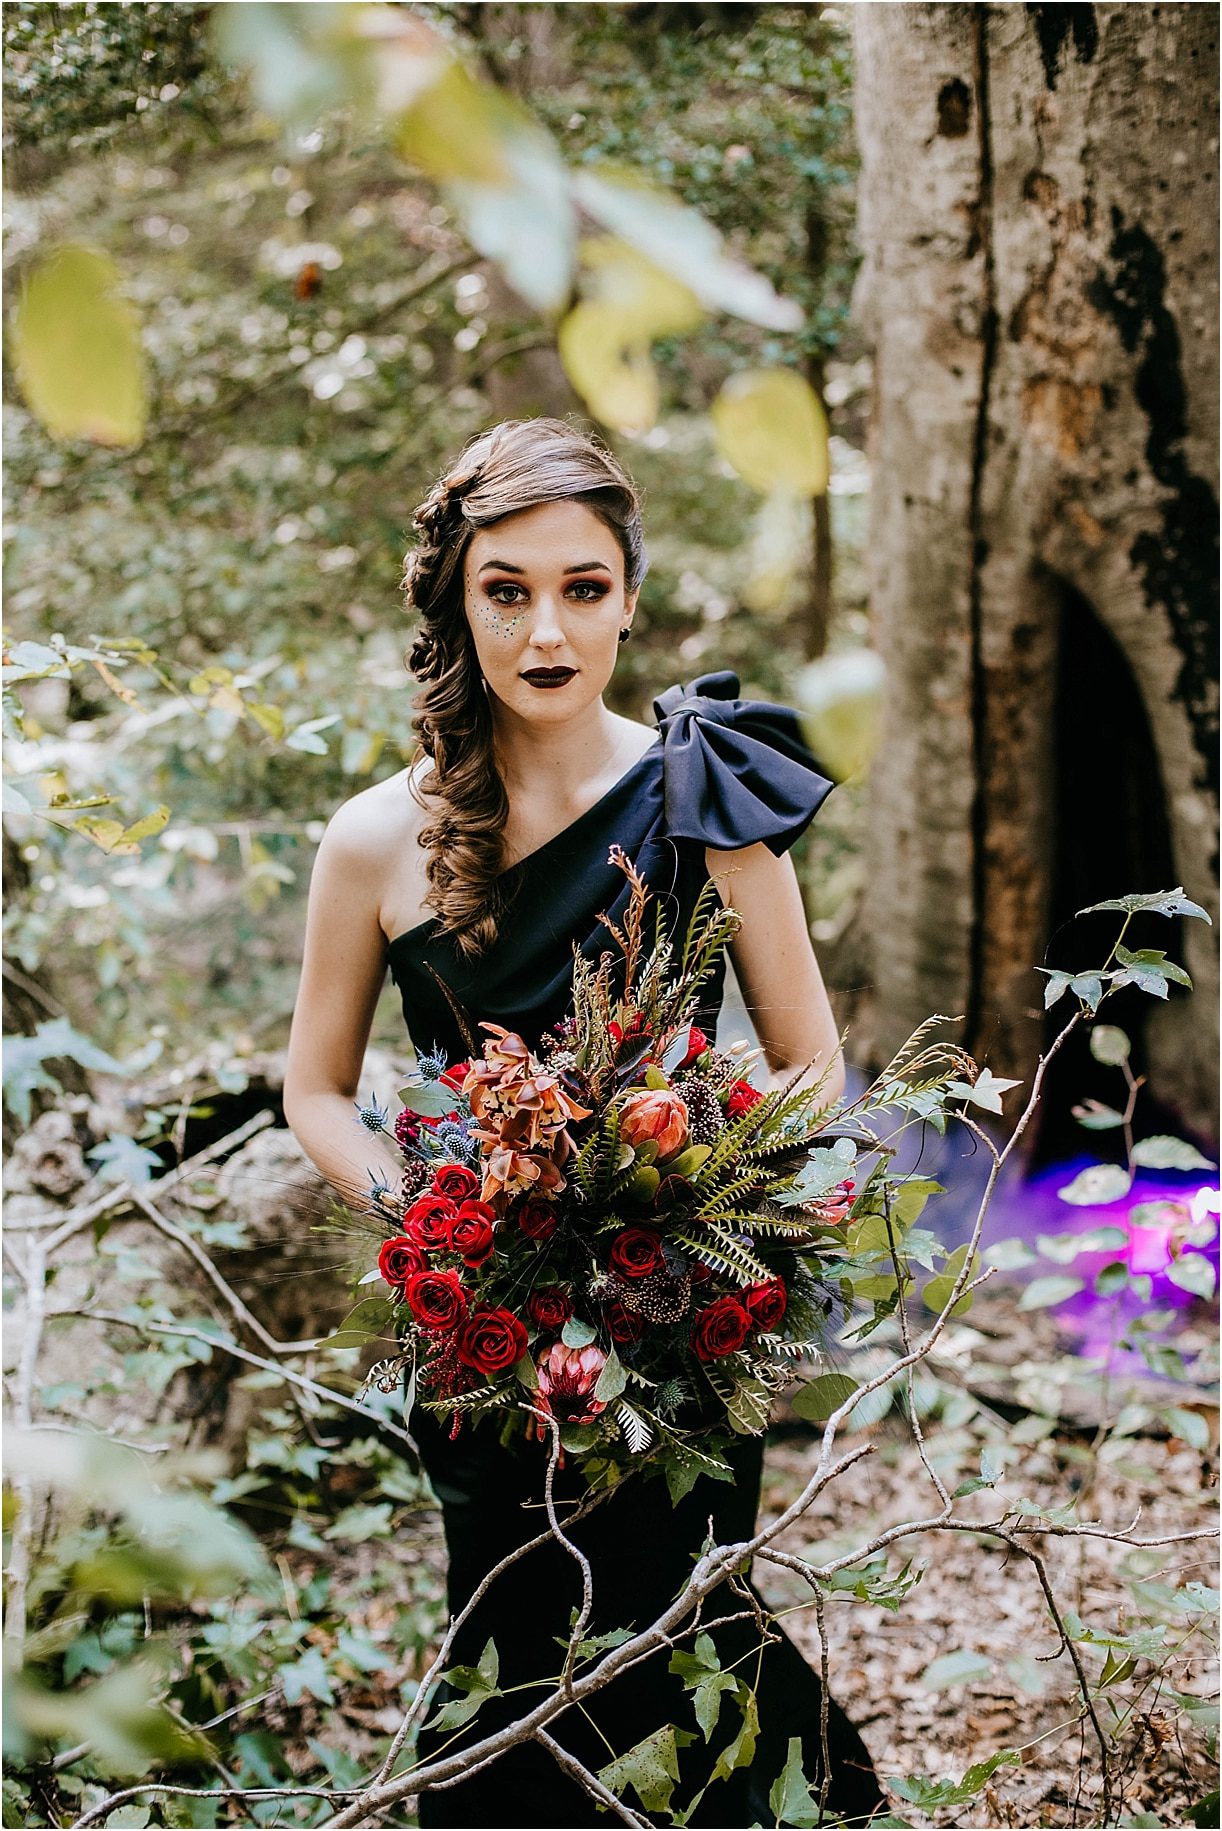 Halloween Wedding Venues Elegant Halloween Wedding Ideas | Hill City Bride Virginia Weddings Blog